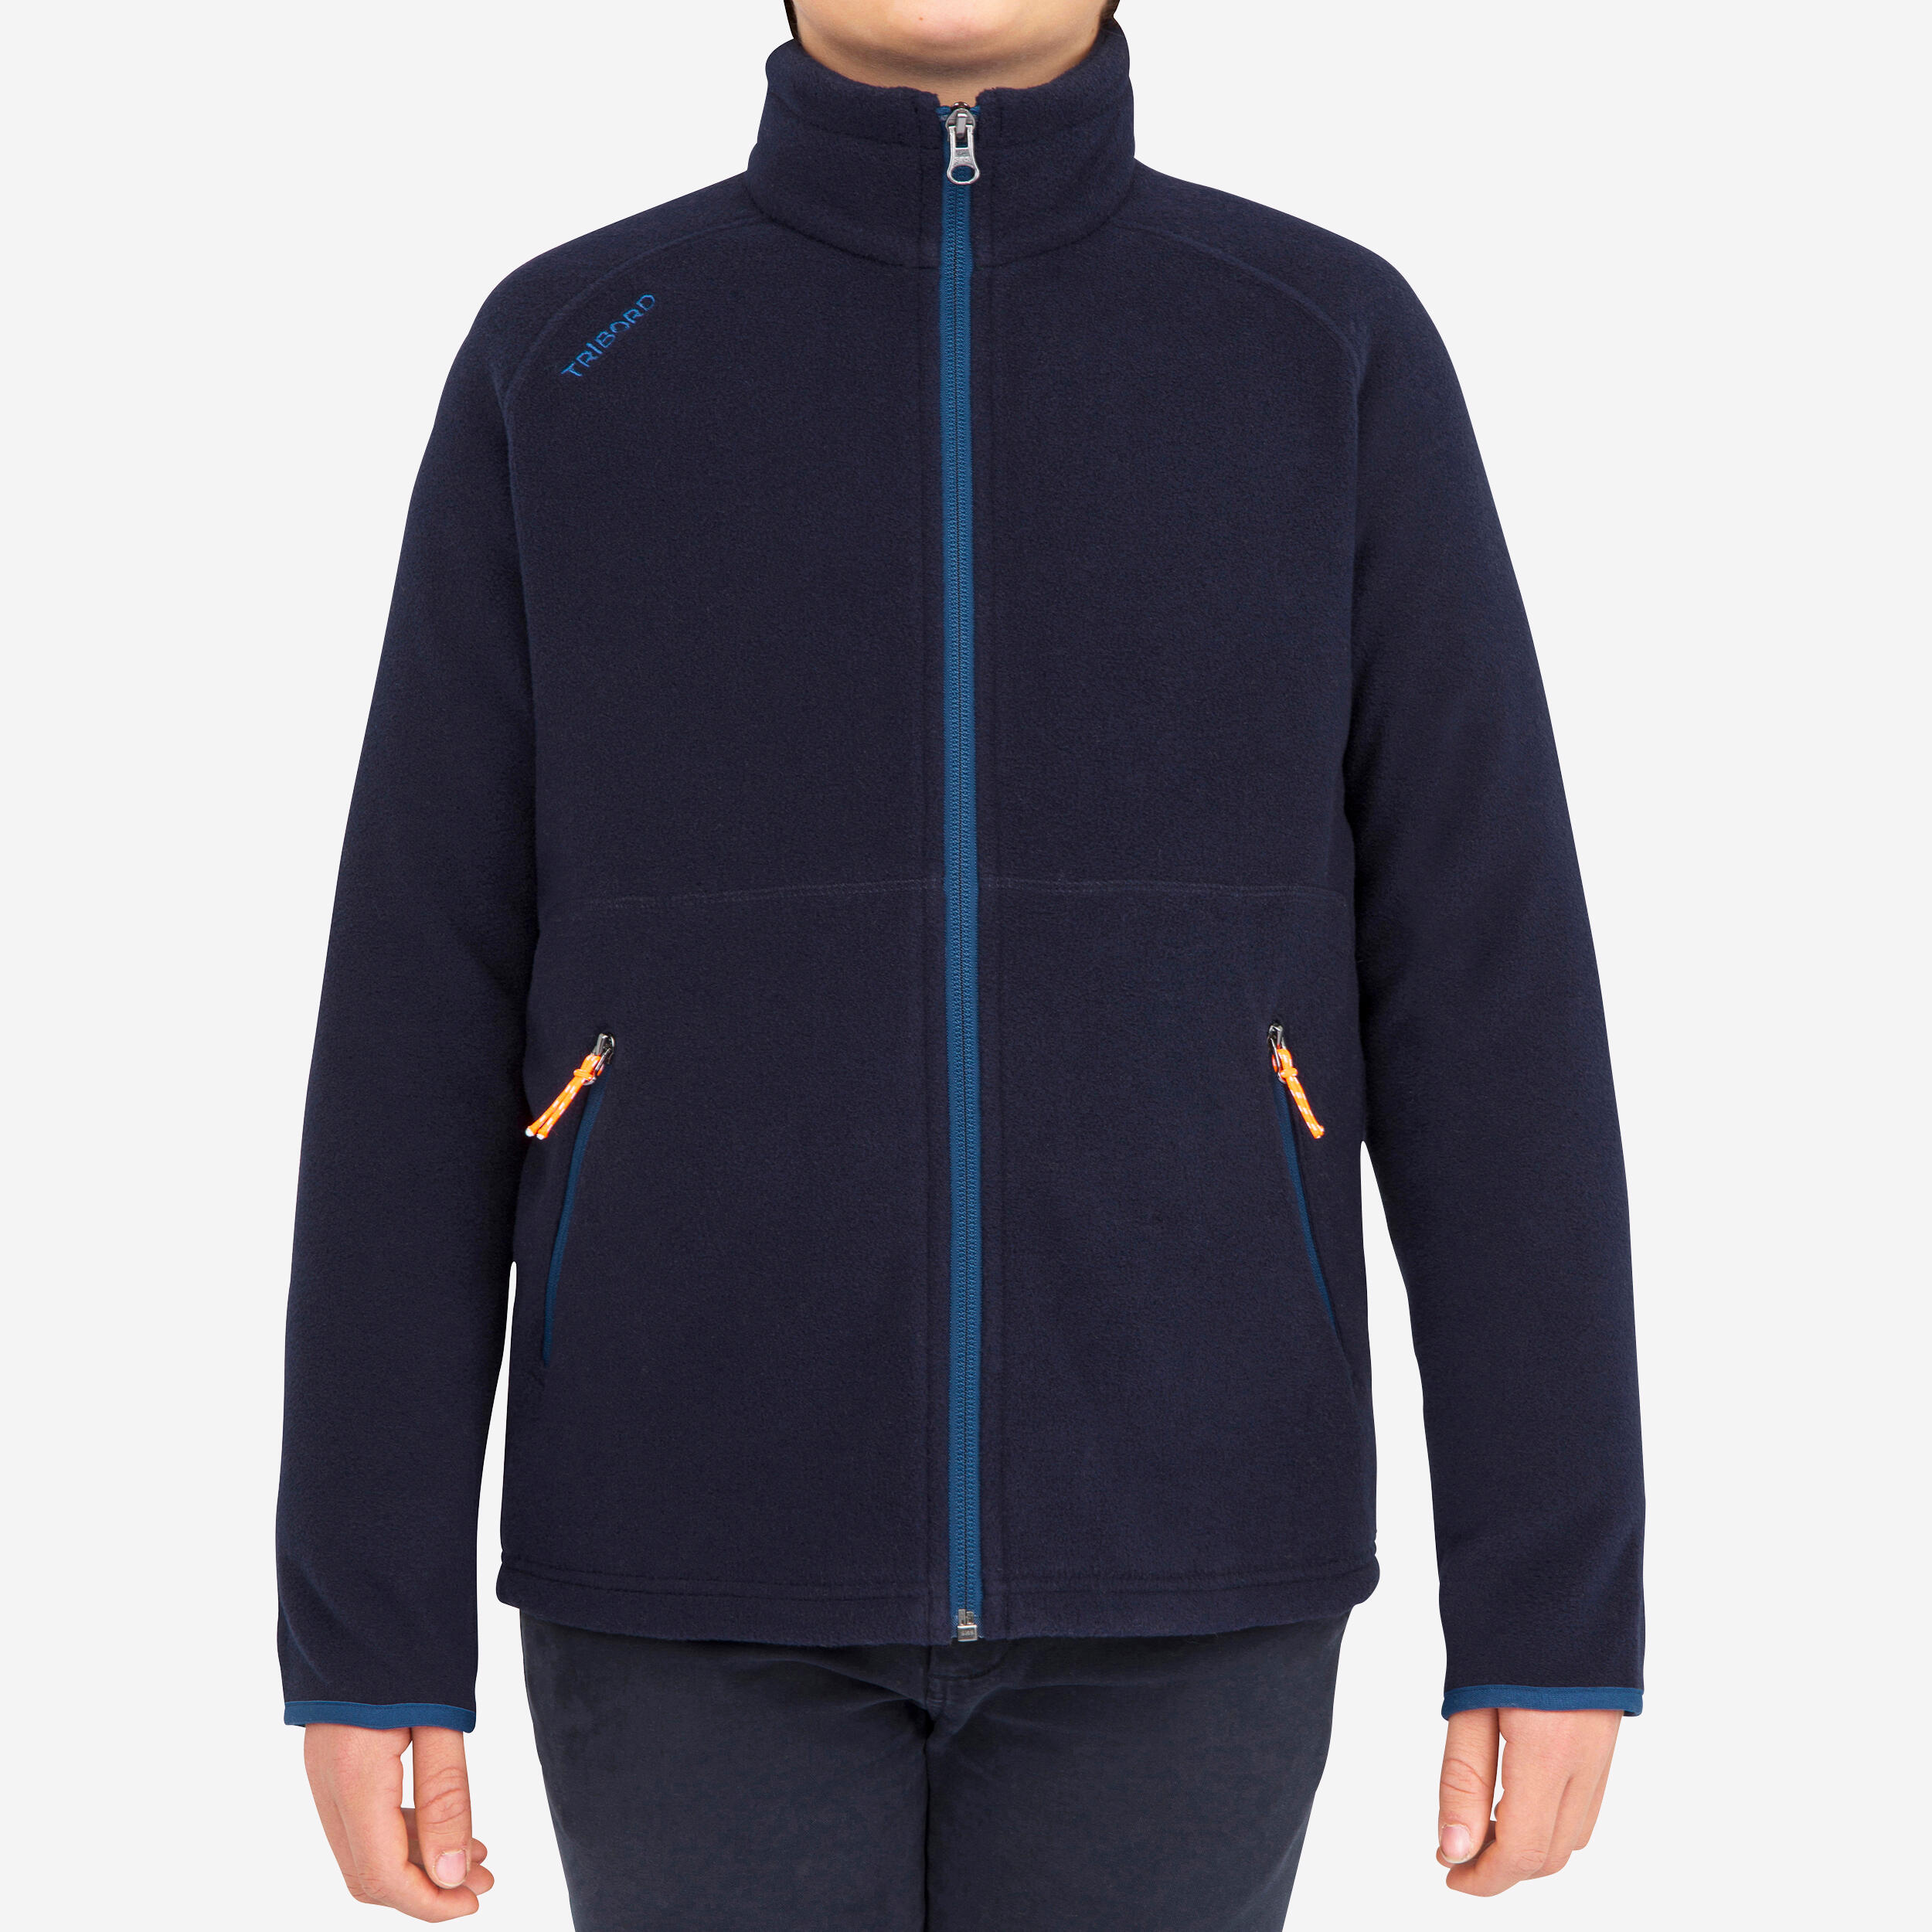 Kids warm fleece sailing jacket 100 - Navy blue 2/9